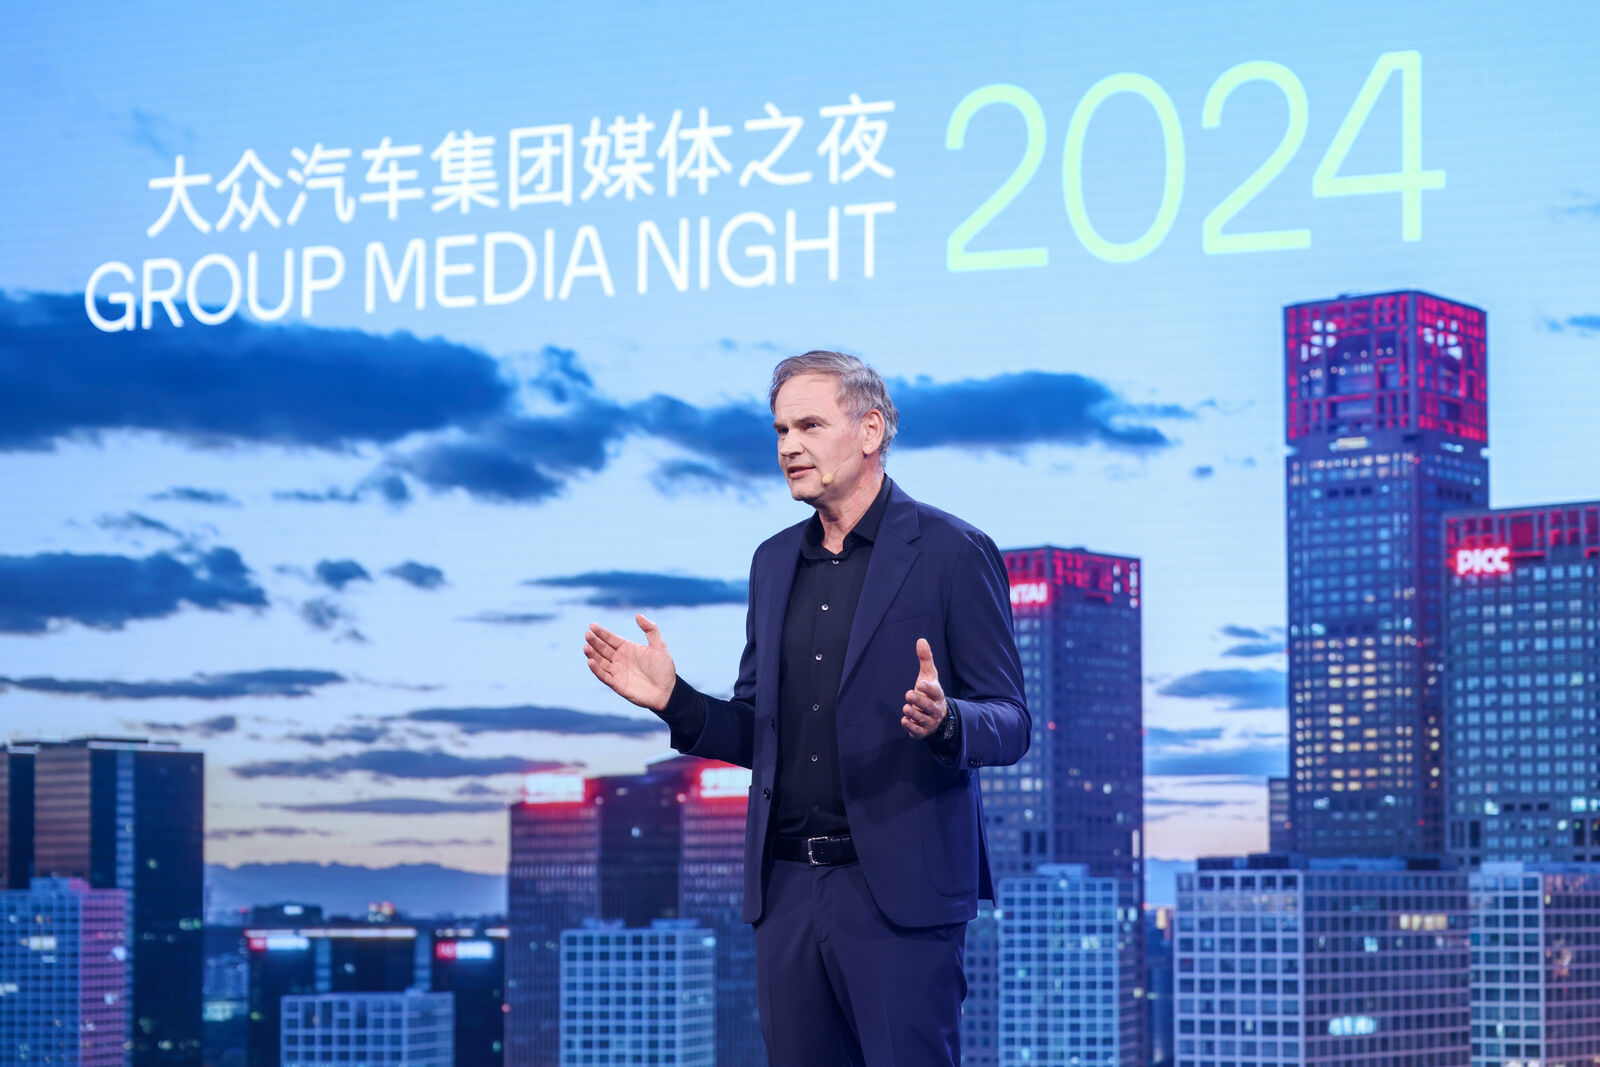 Oliver Blume, CEO Volkswagen Group, speaks at the Volkswagen Group Media Night 2024 in Beijing